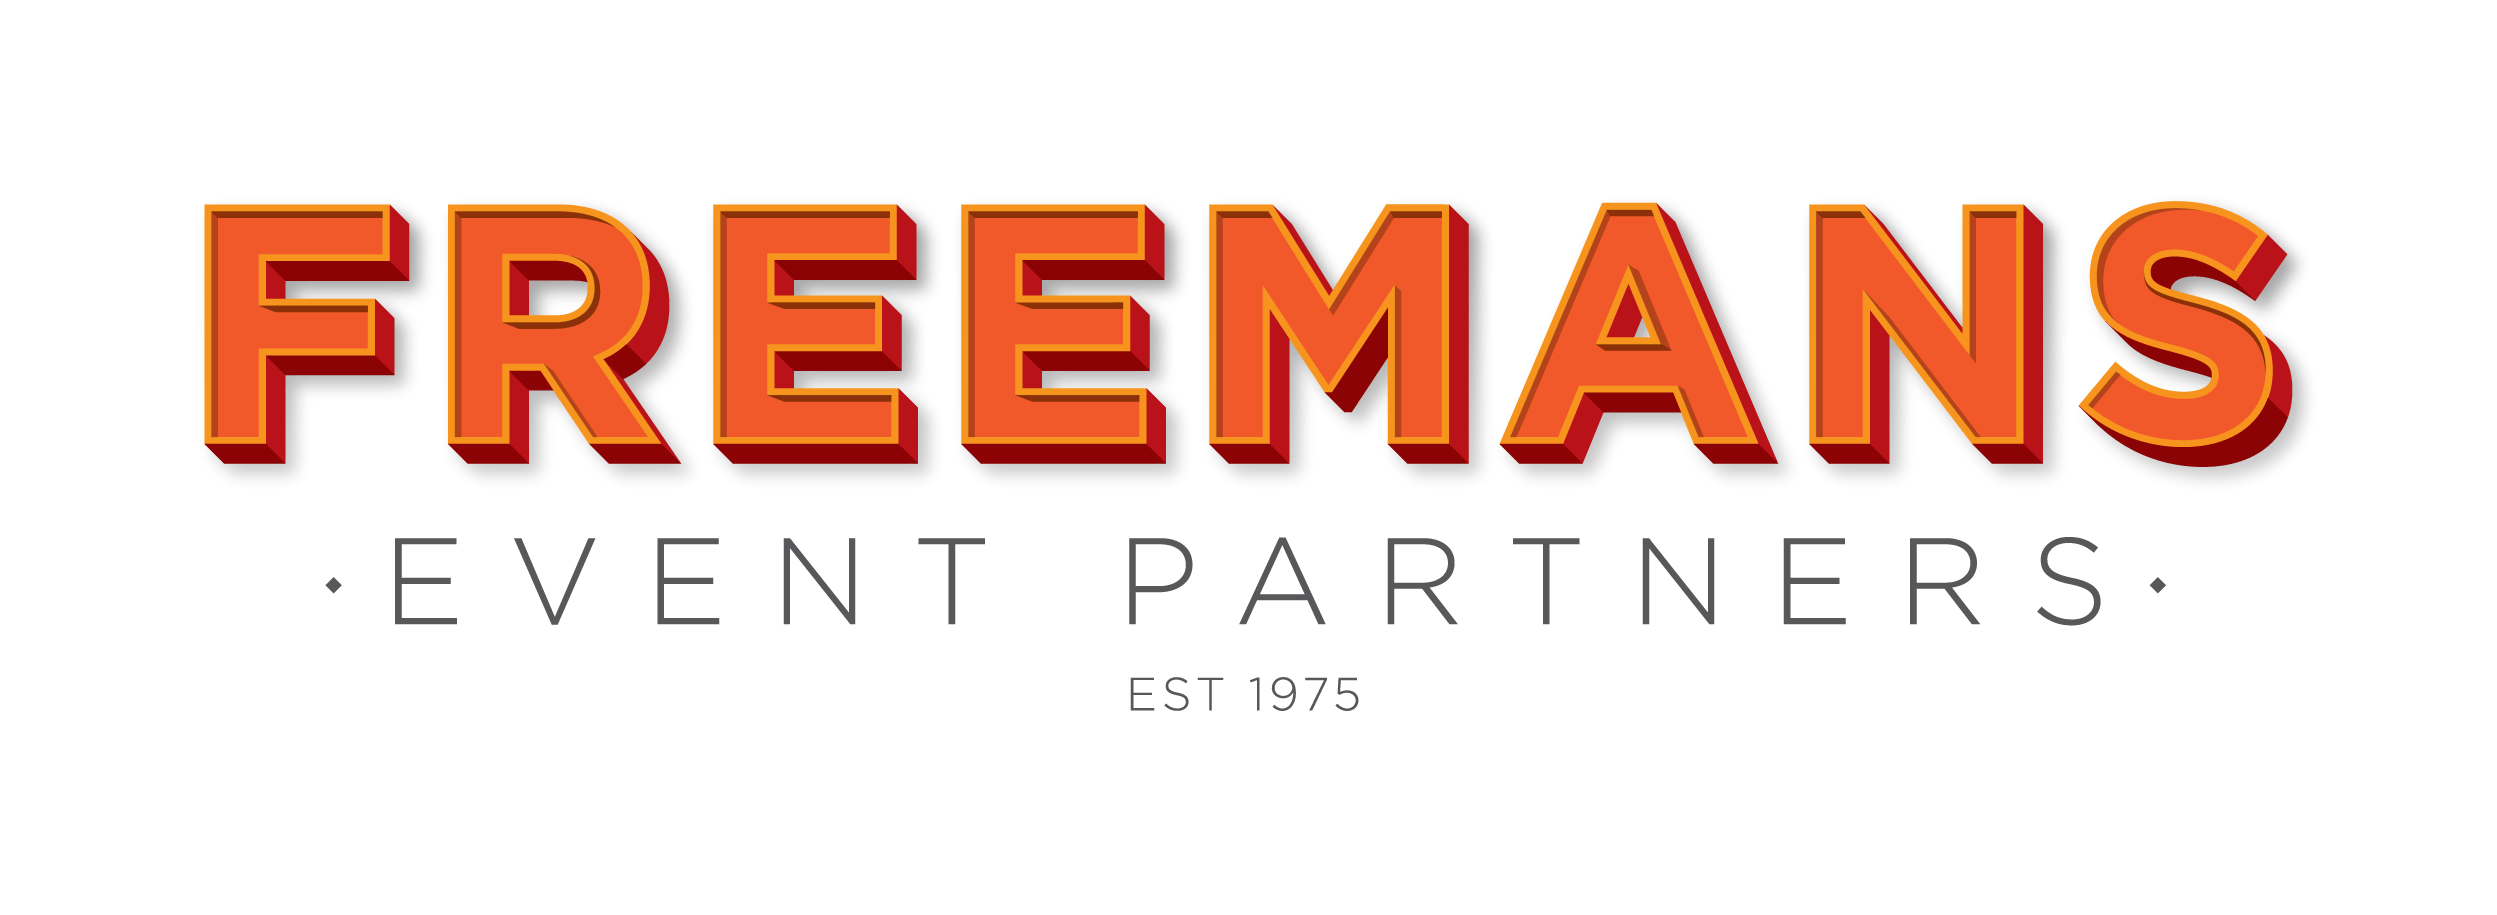 Freemans Event Partners Logo